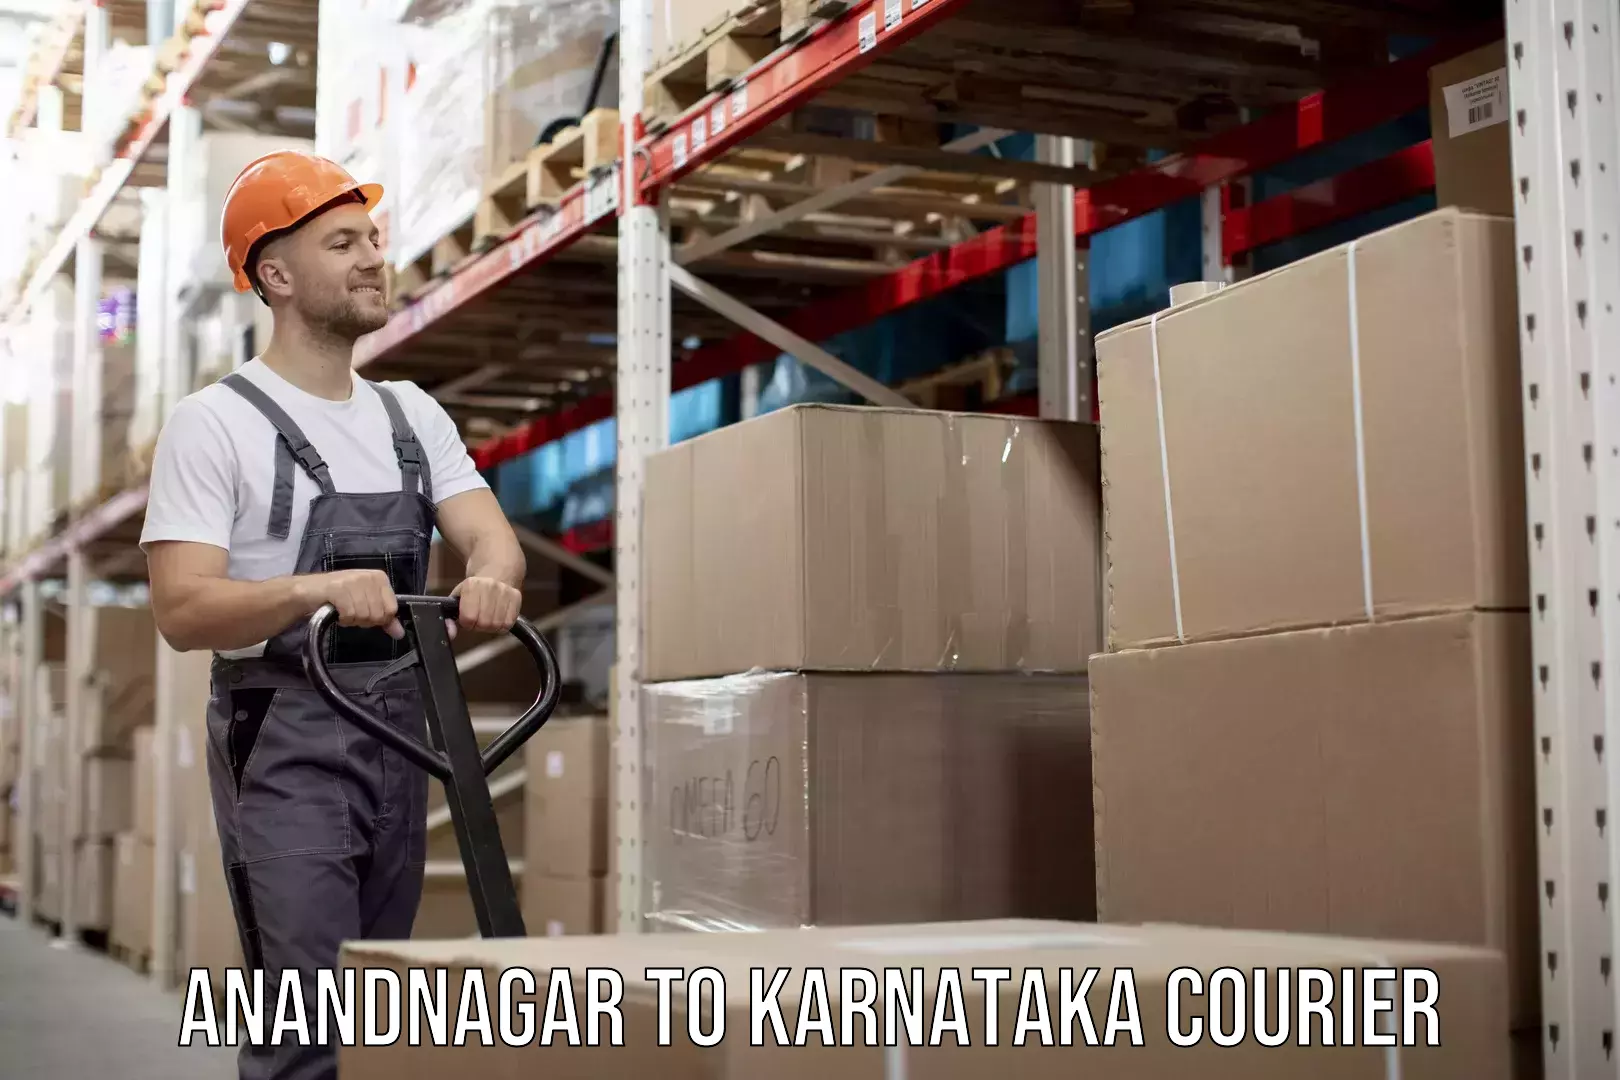 Cash on delivery service Anandnagar to Karnataka